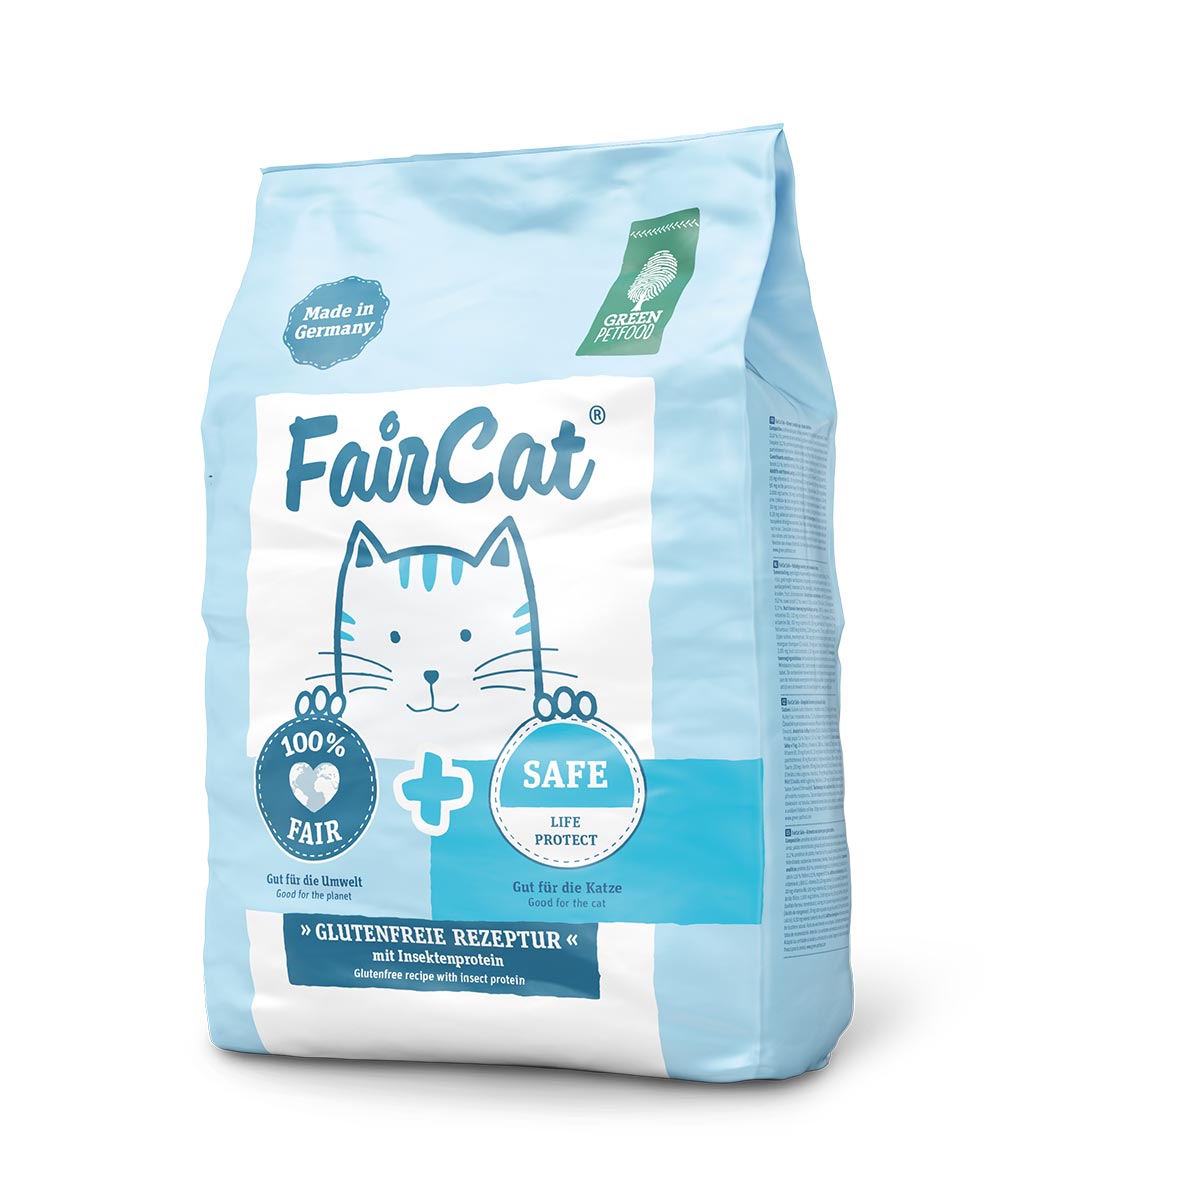 faircat safe 300g